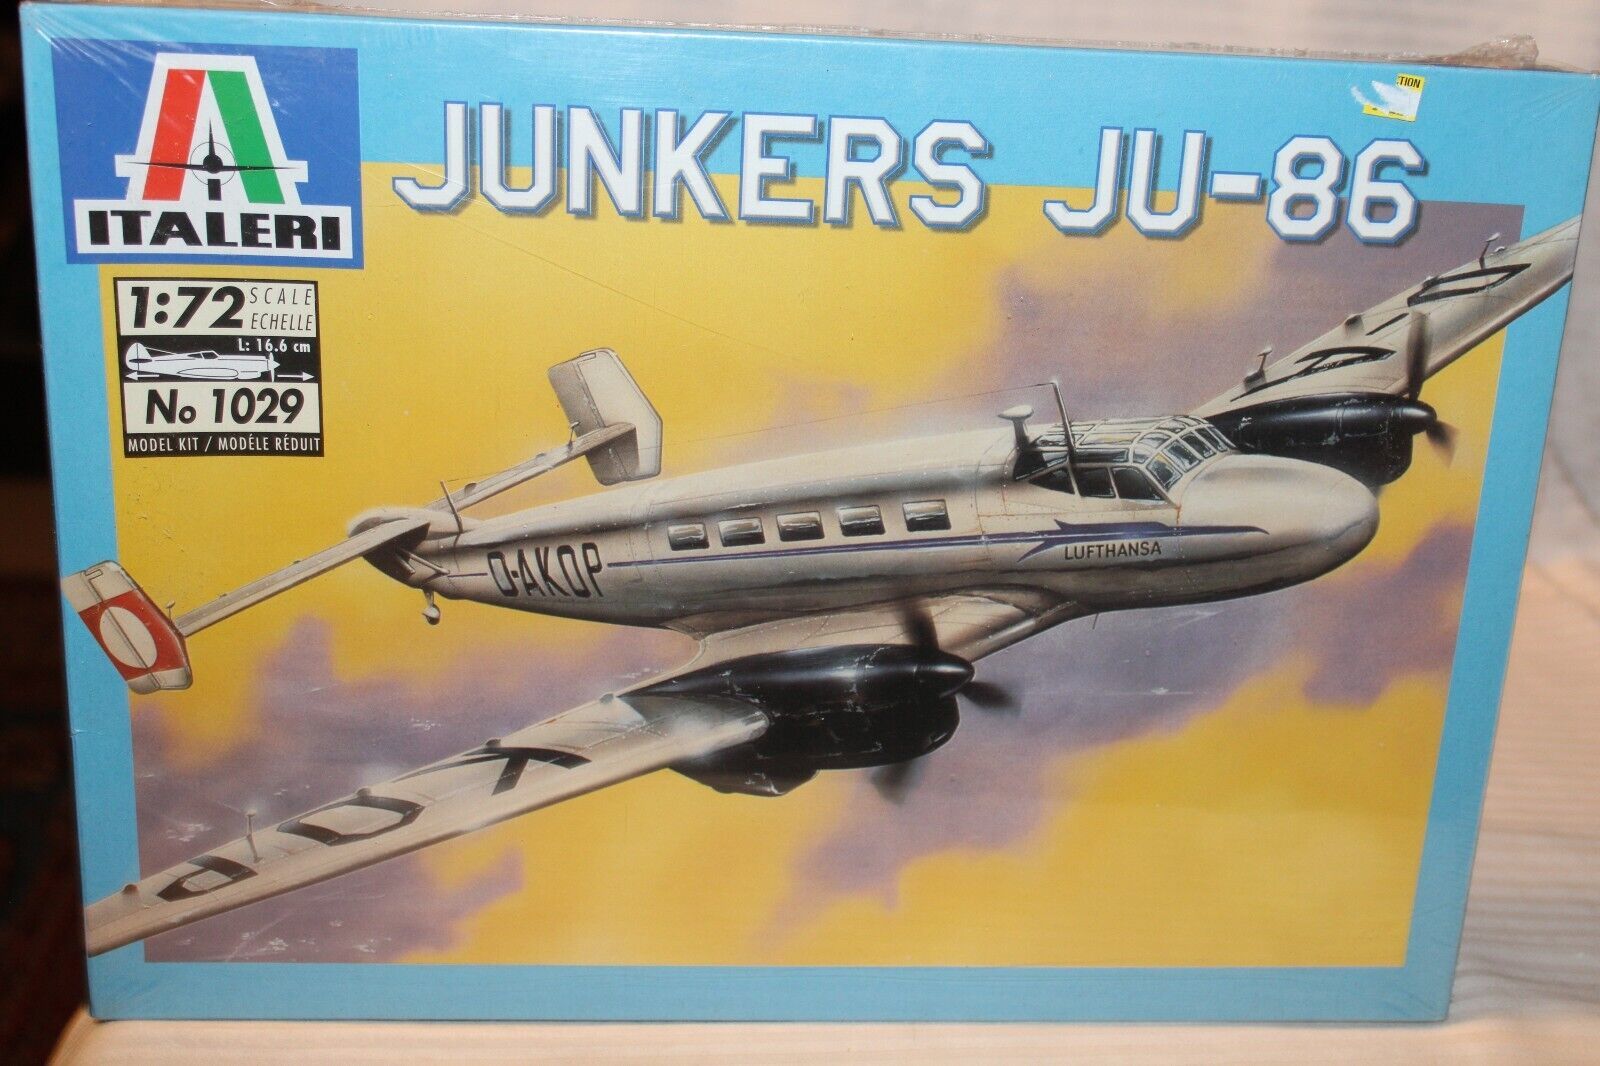 Primary image for 1/72 Scale Italeri, Junkers JU-86 Airplane Model Kit #1029 BN Sealed Box